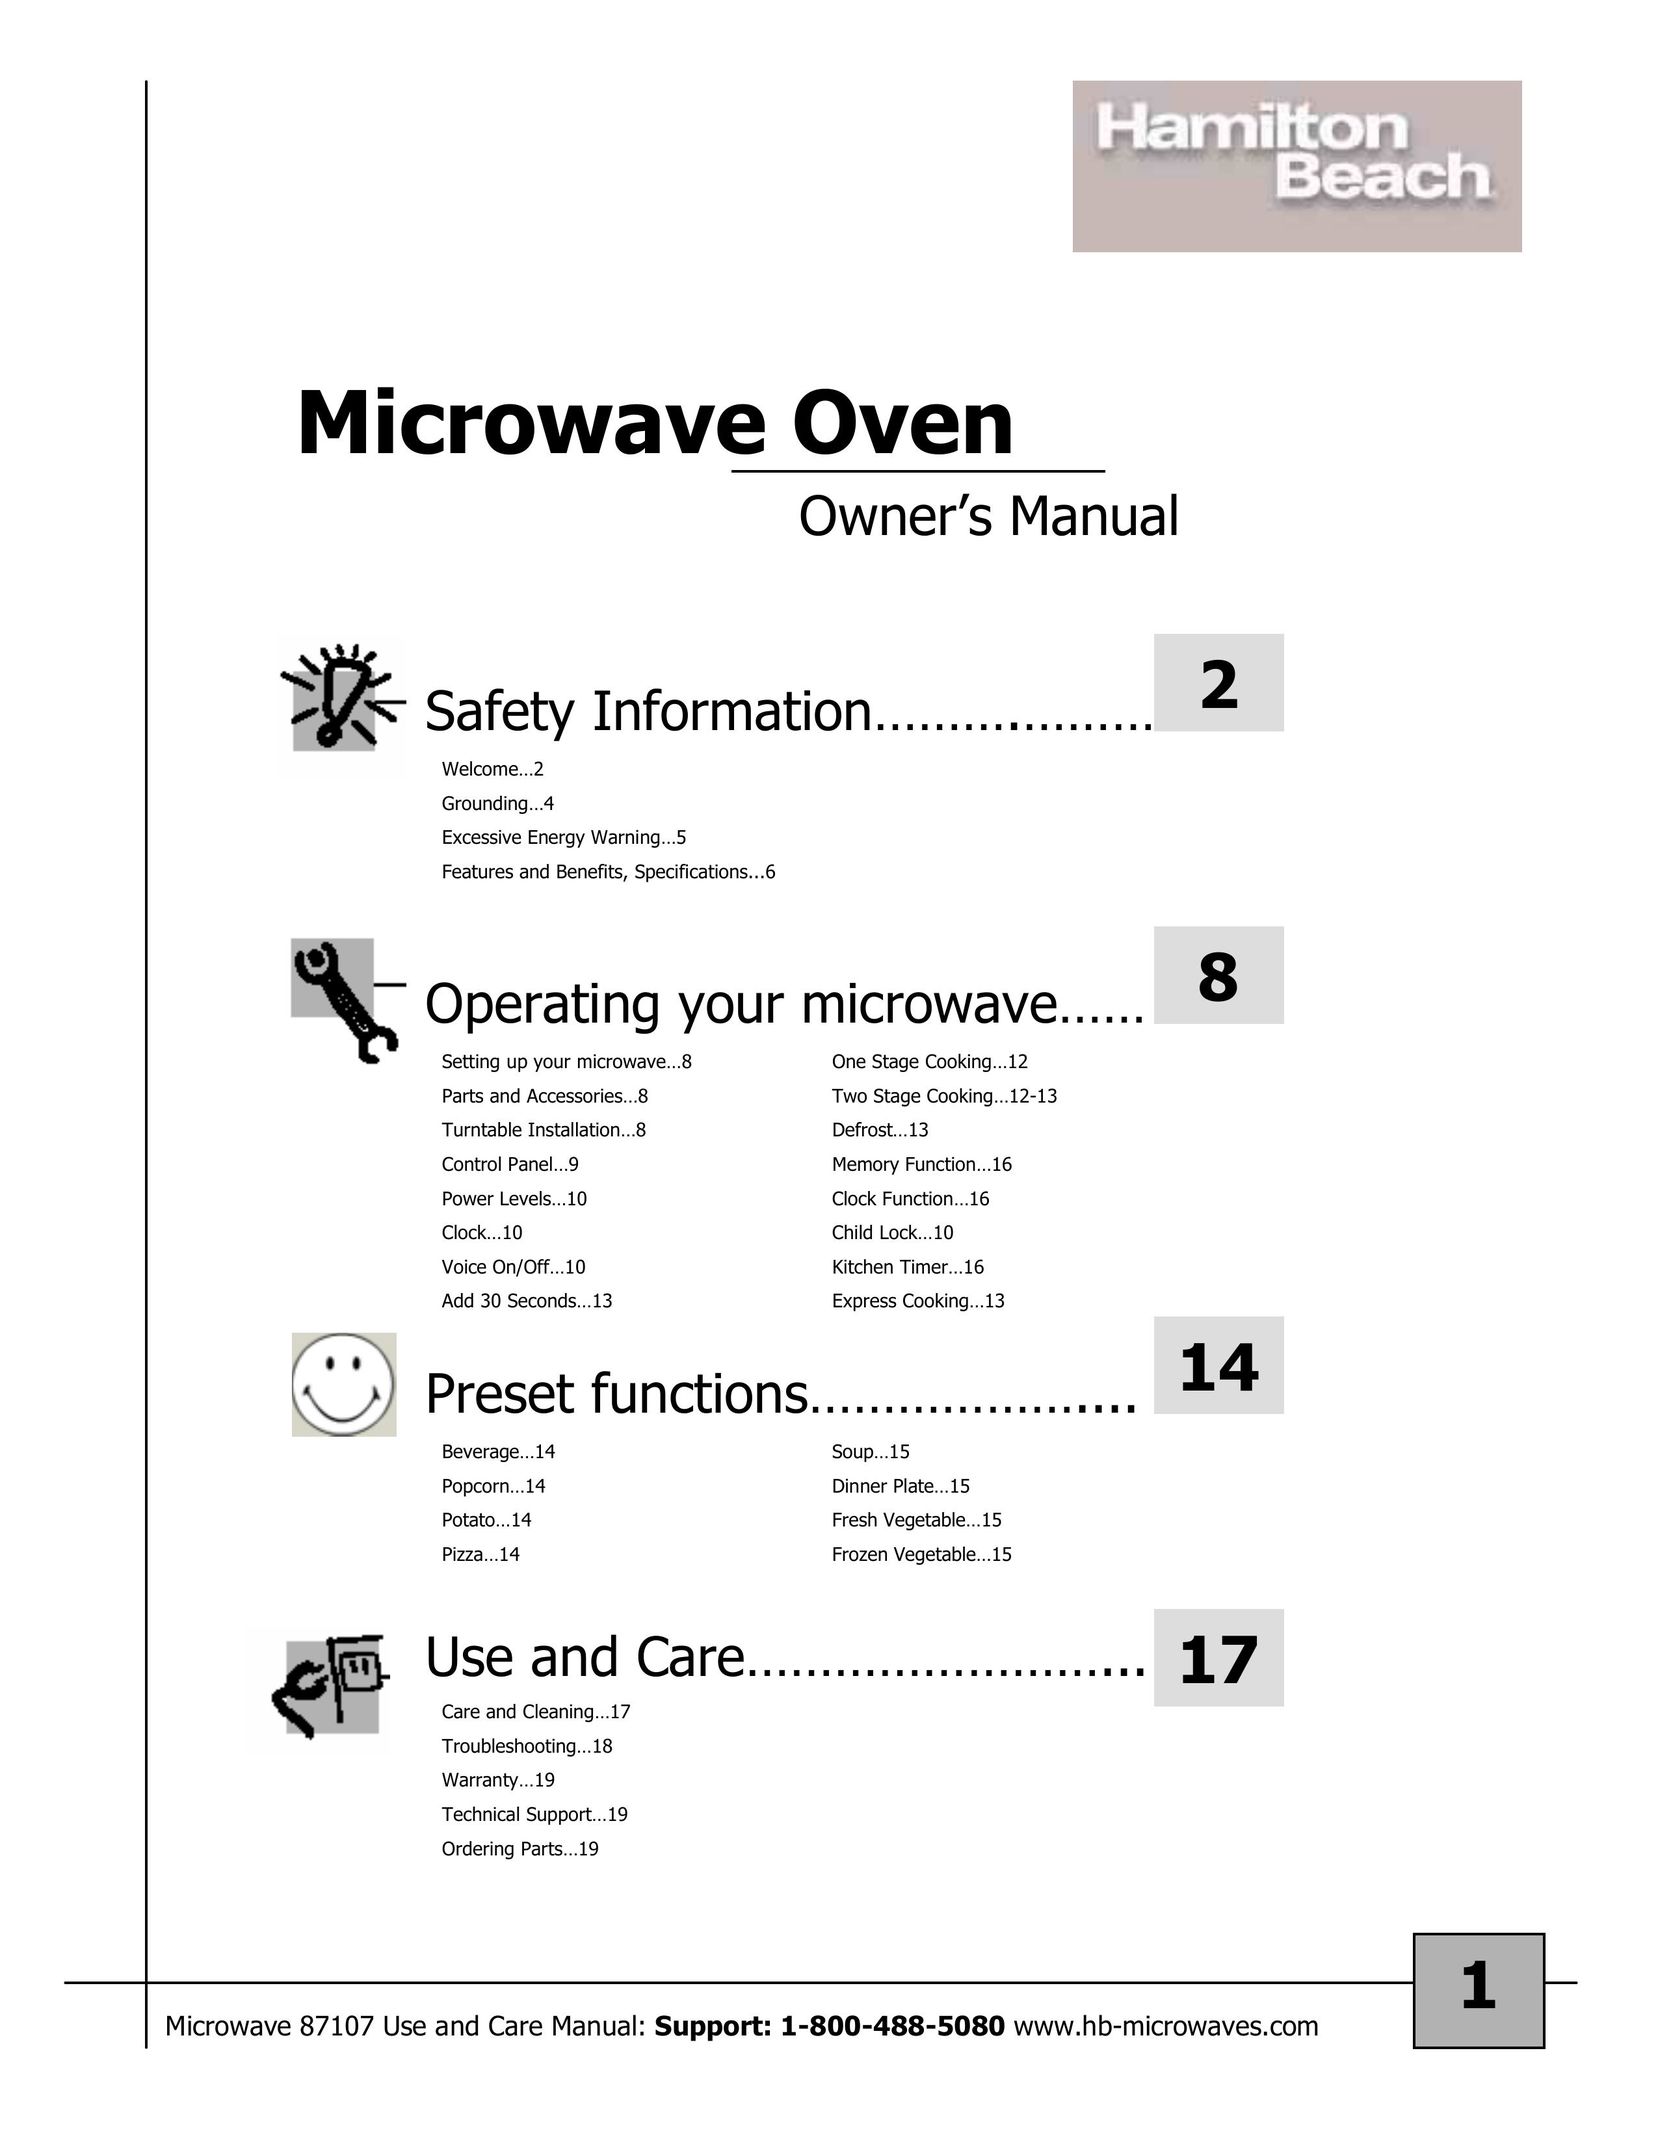 Hamilton Beach 87107 Microwave Oven User Manual